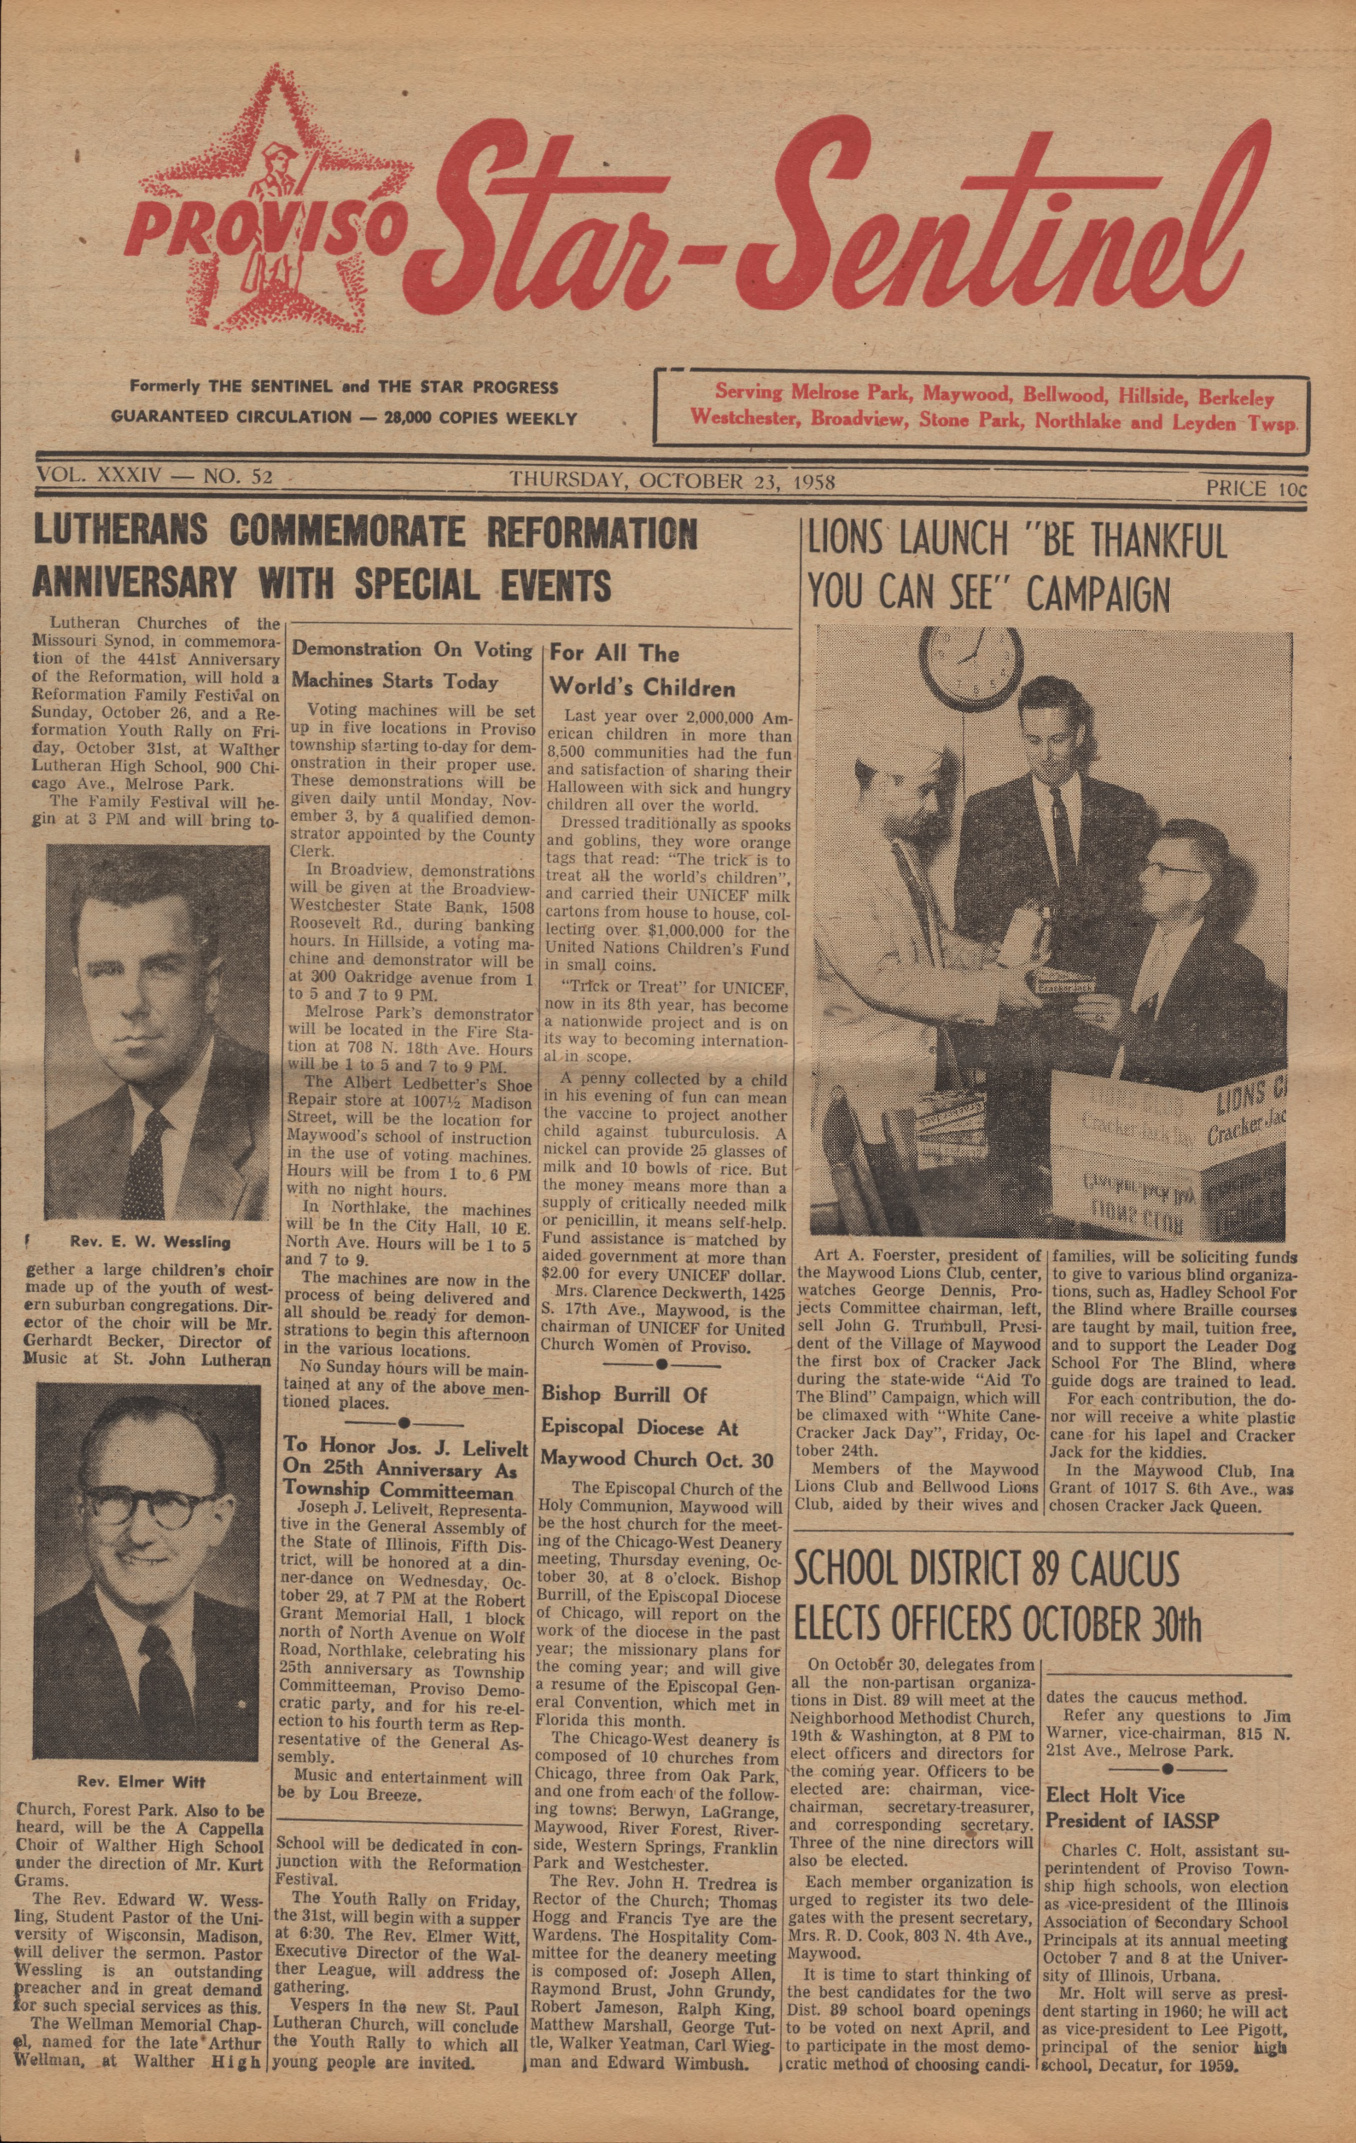 Proviso Star-Sentinel – 19581023